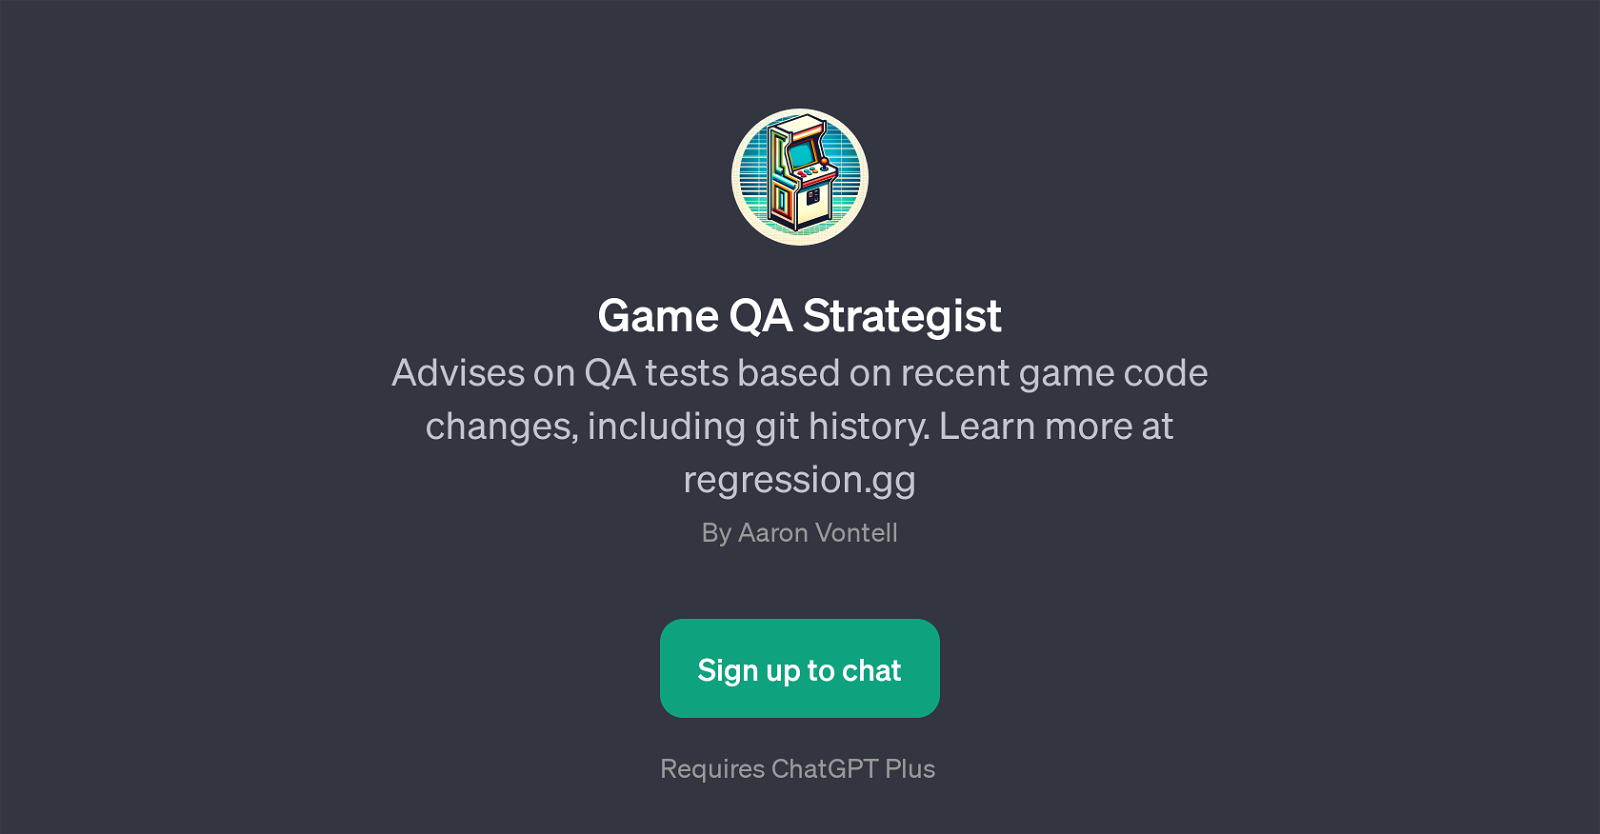 Game QA Strategist website